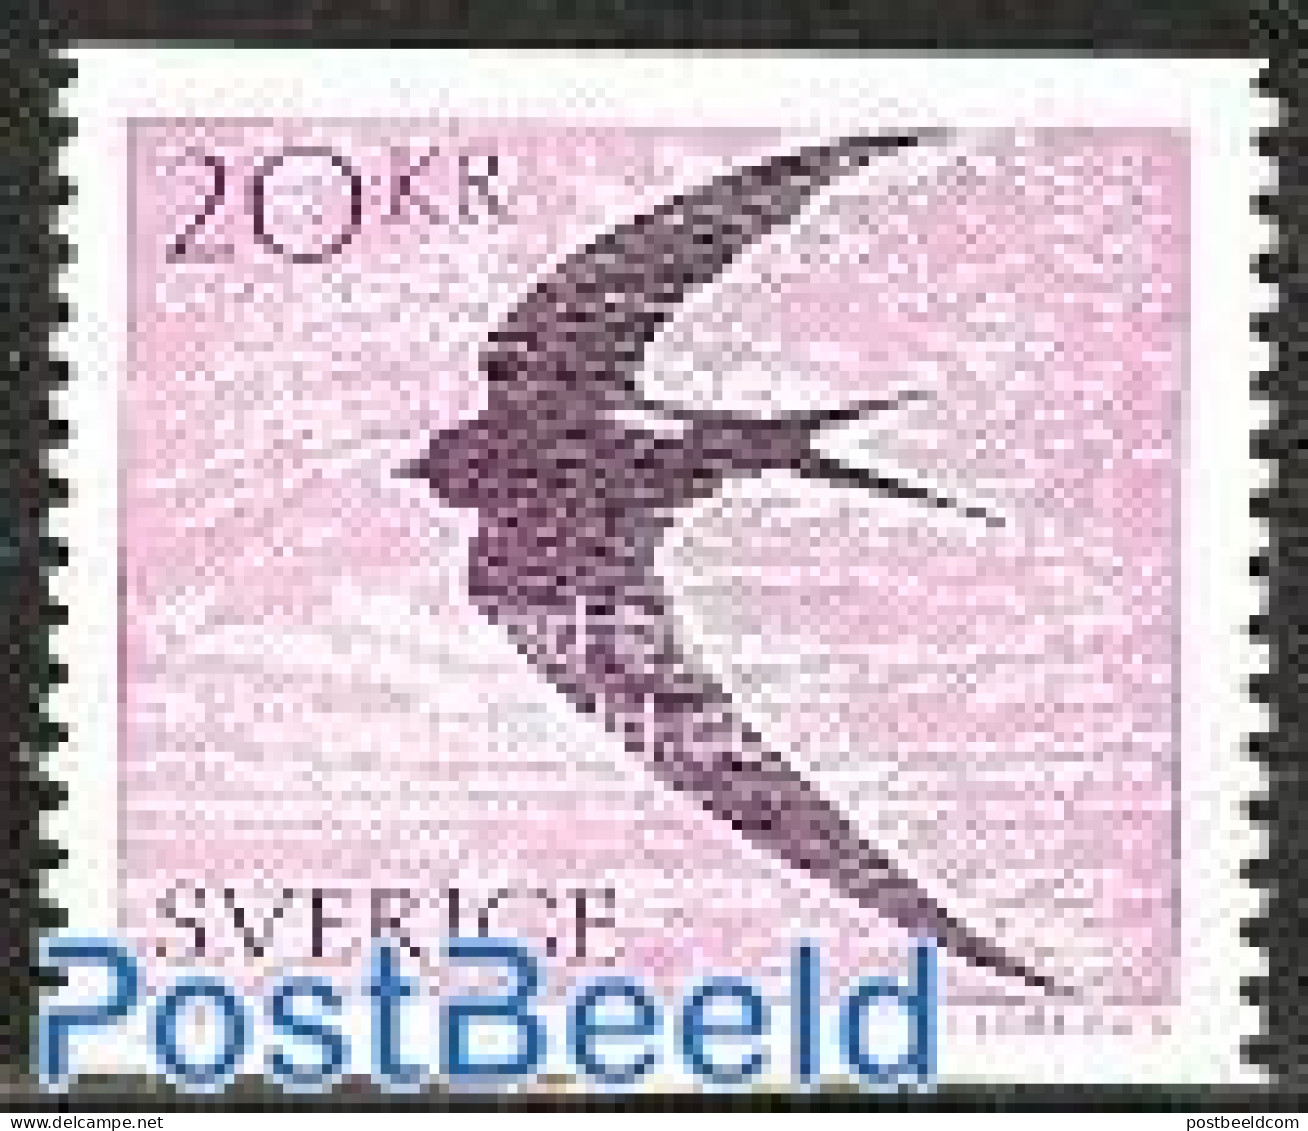 Sweden 1988 Definitive 1v, Mint NH, Nature - Birds - Neufs